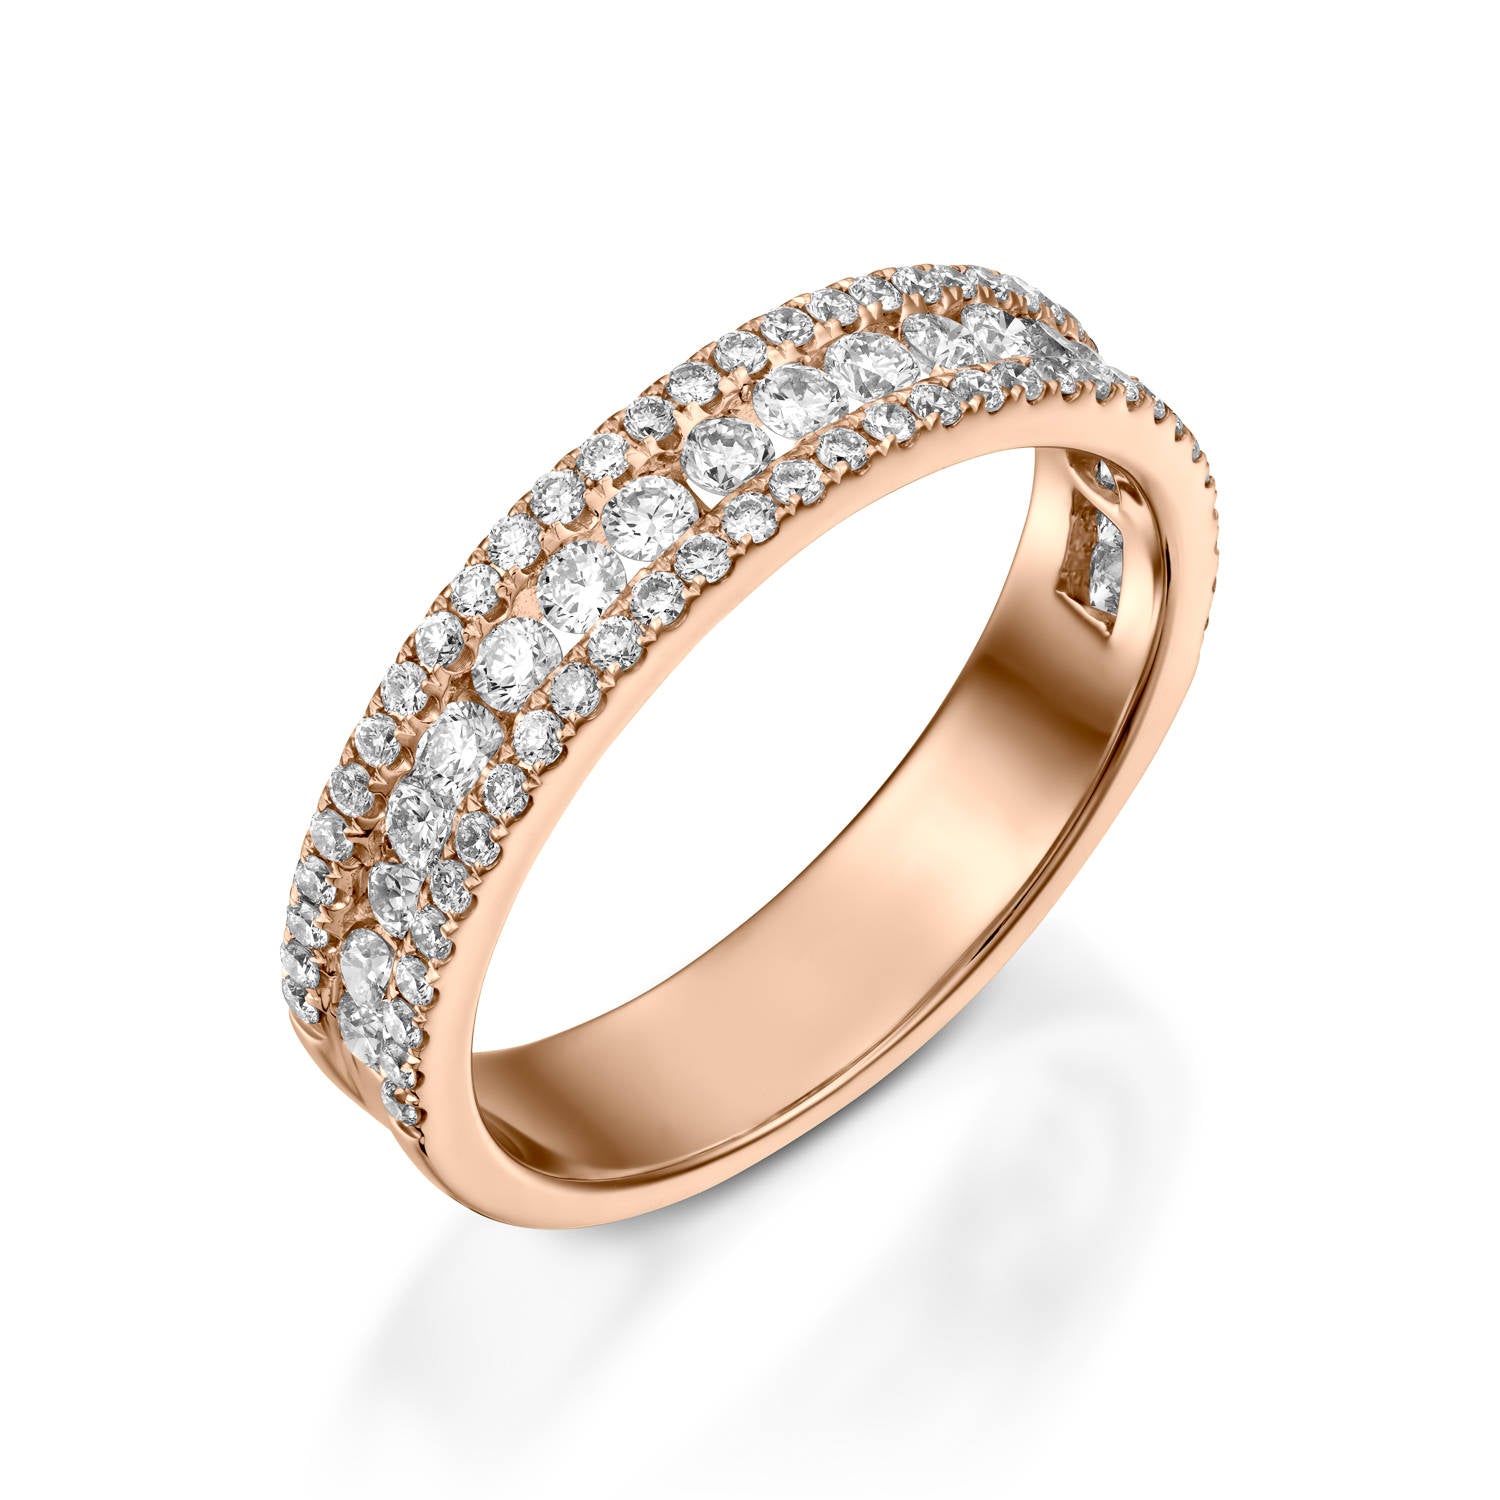 RNT12696Rose gold diamond wedding band for her